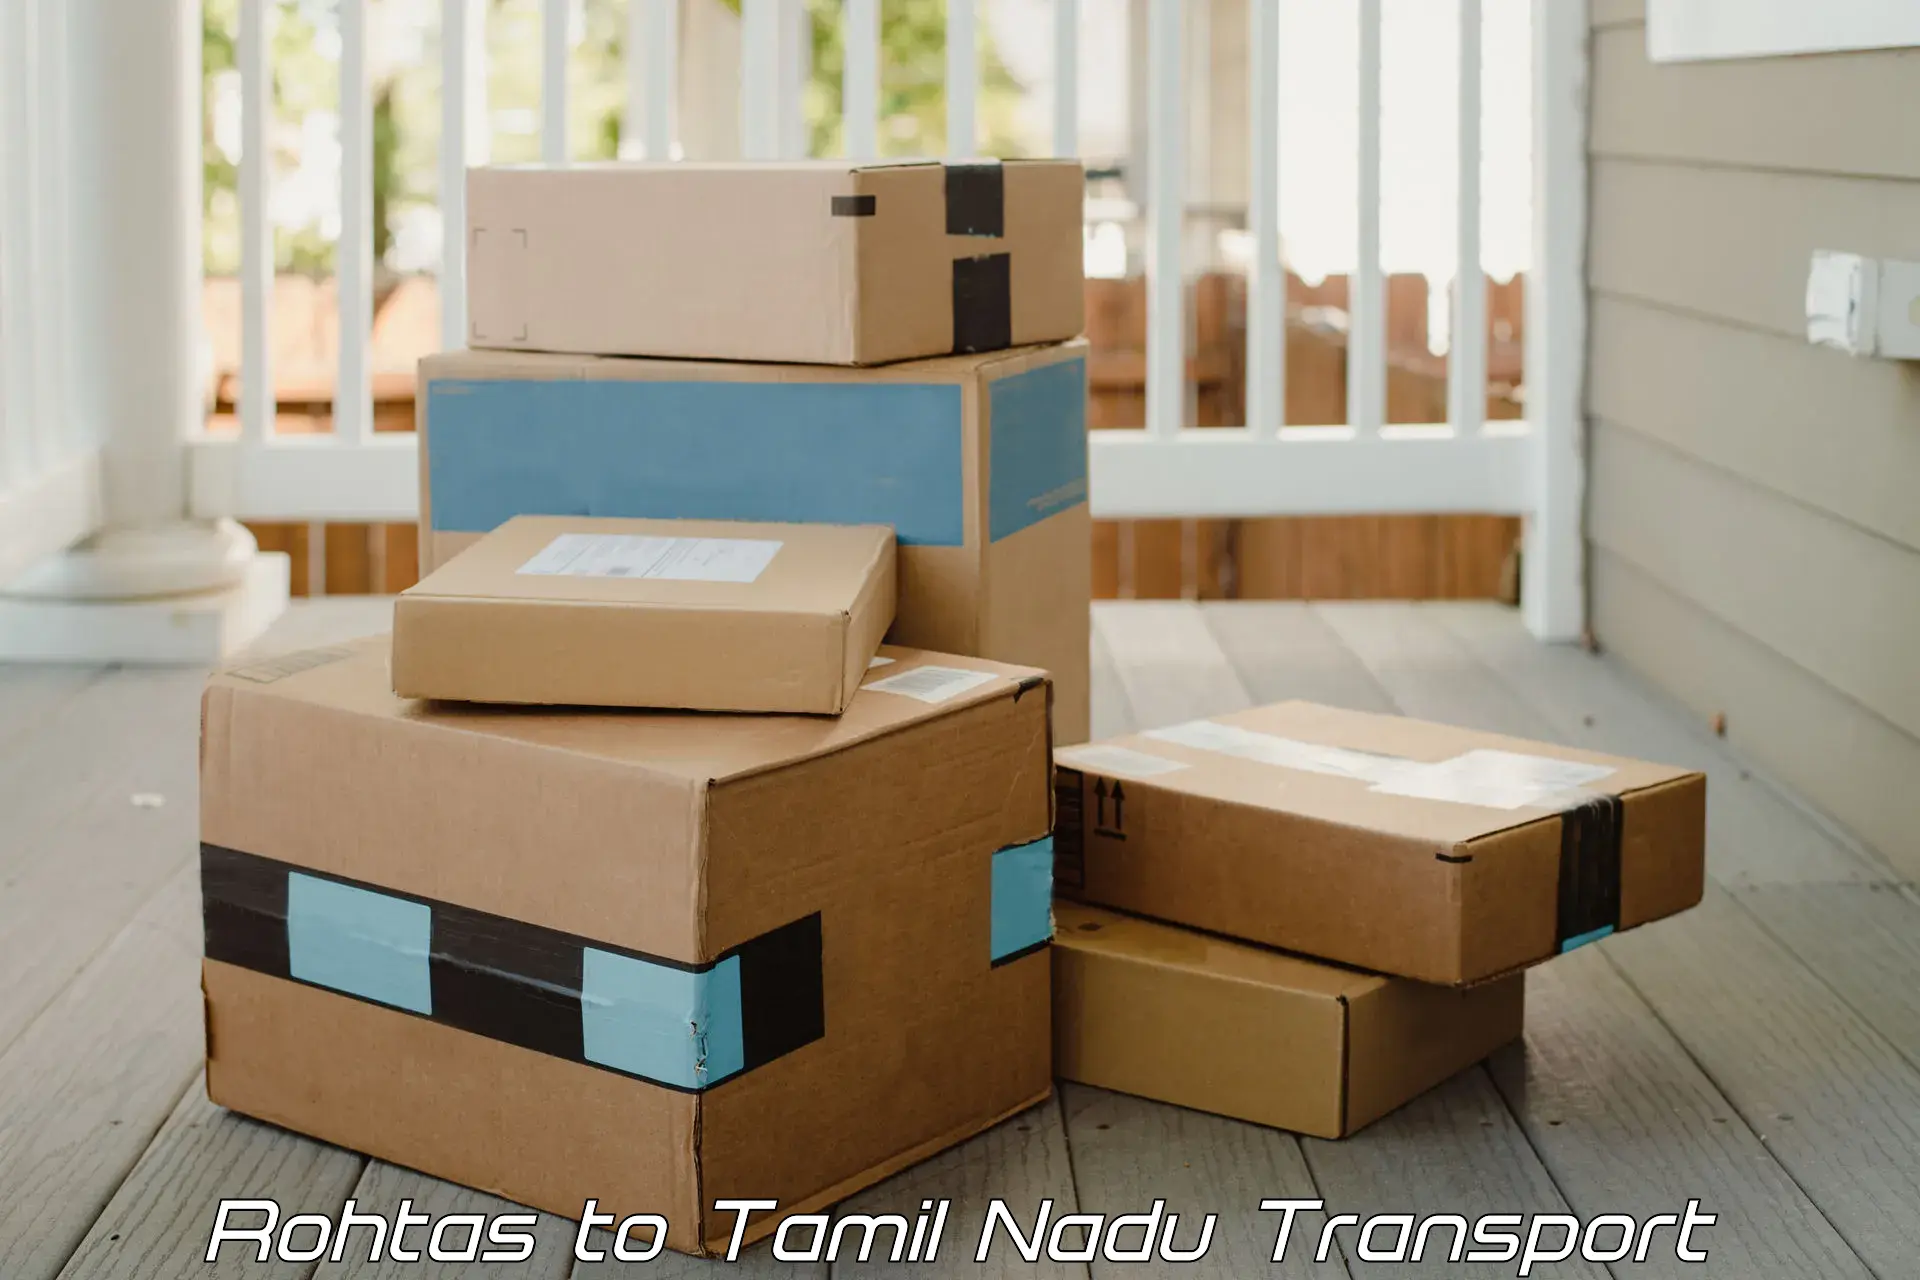 Vehicle parcel service Rohtas to Villupuram